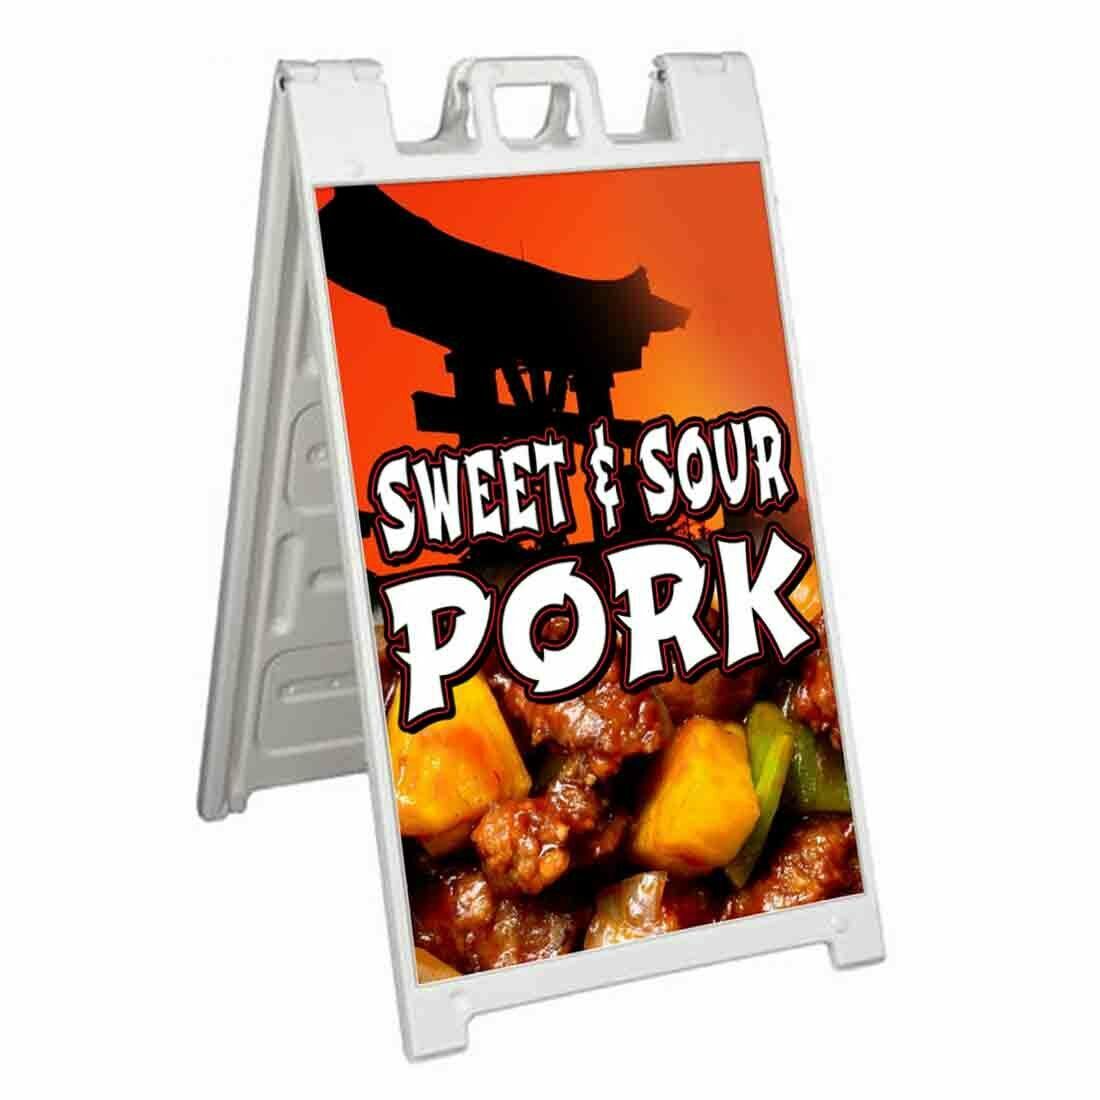 SWEET AND SOUR PORK Signicade 24x36 Aframe Sidewalk Sign Banner Decal FOOD